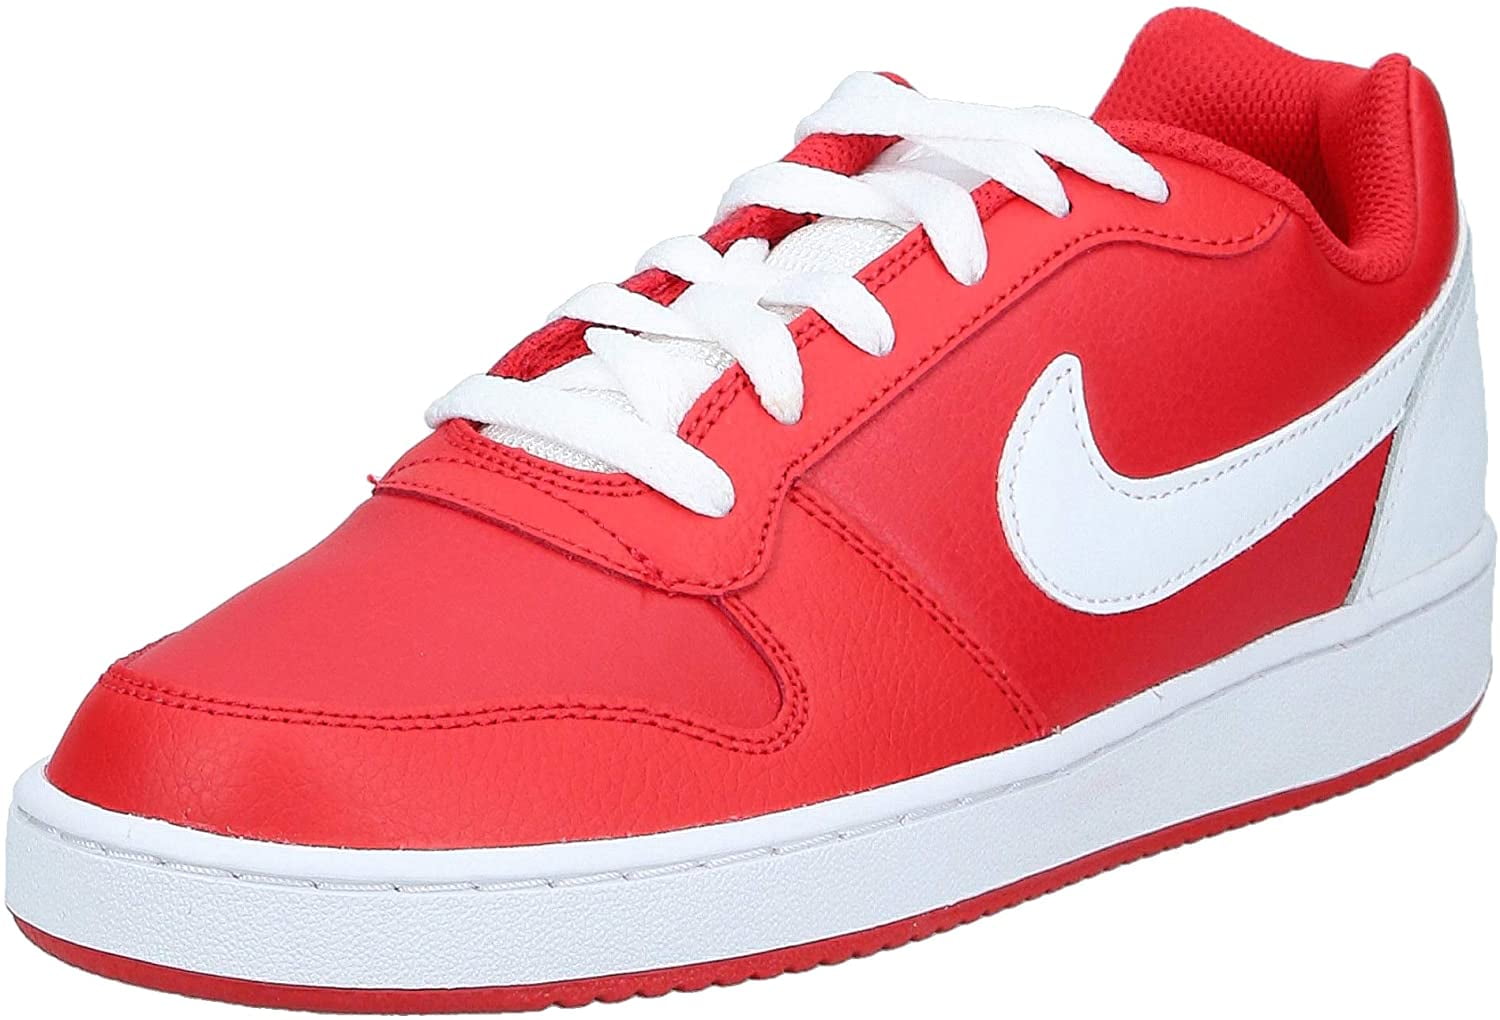 Nike Men's Ebernon Low Basketball Shoe, university red/white, 10.5 ...